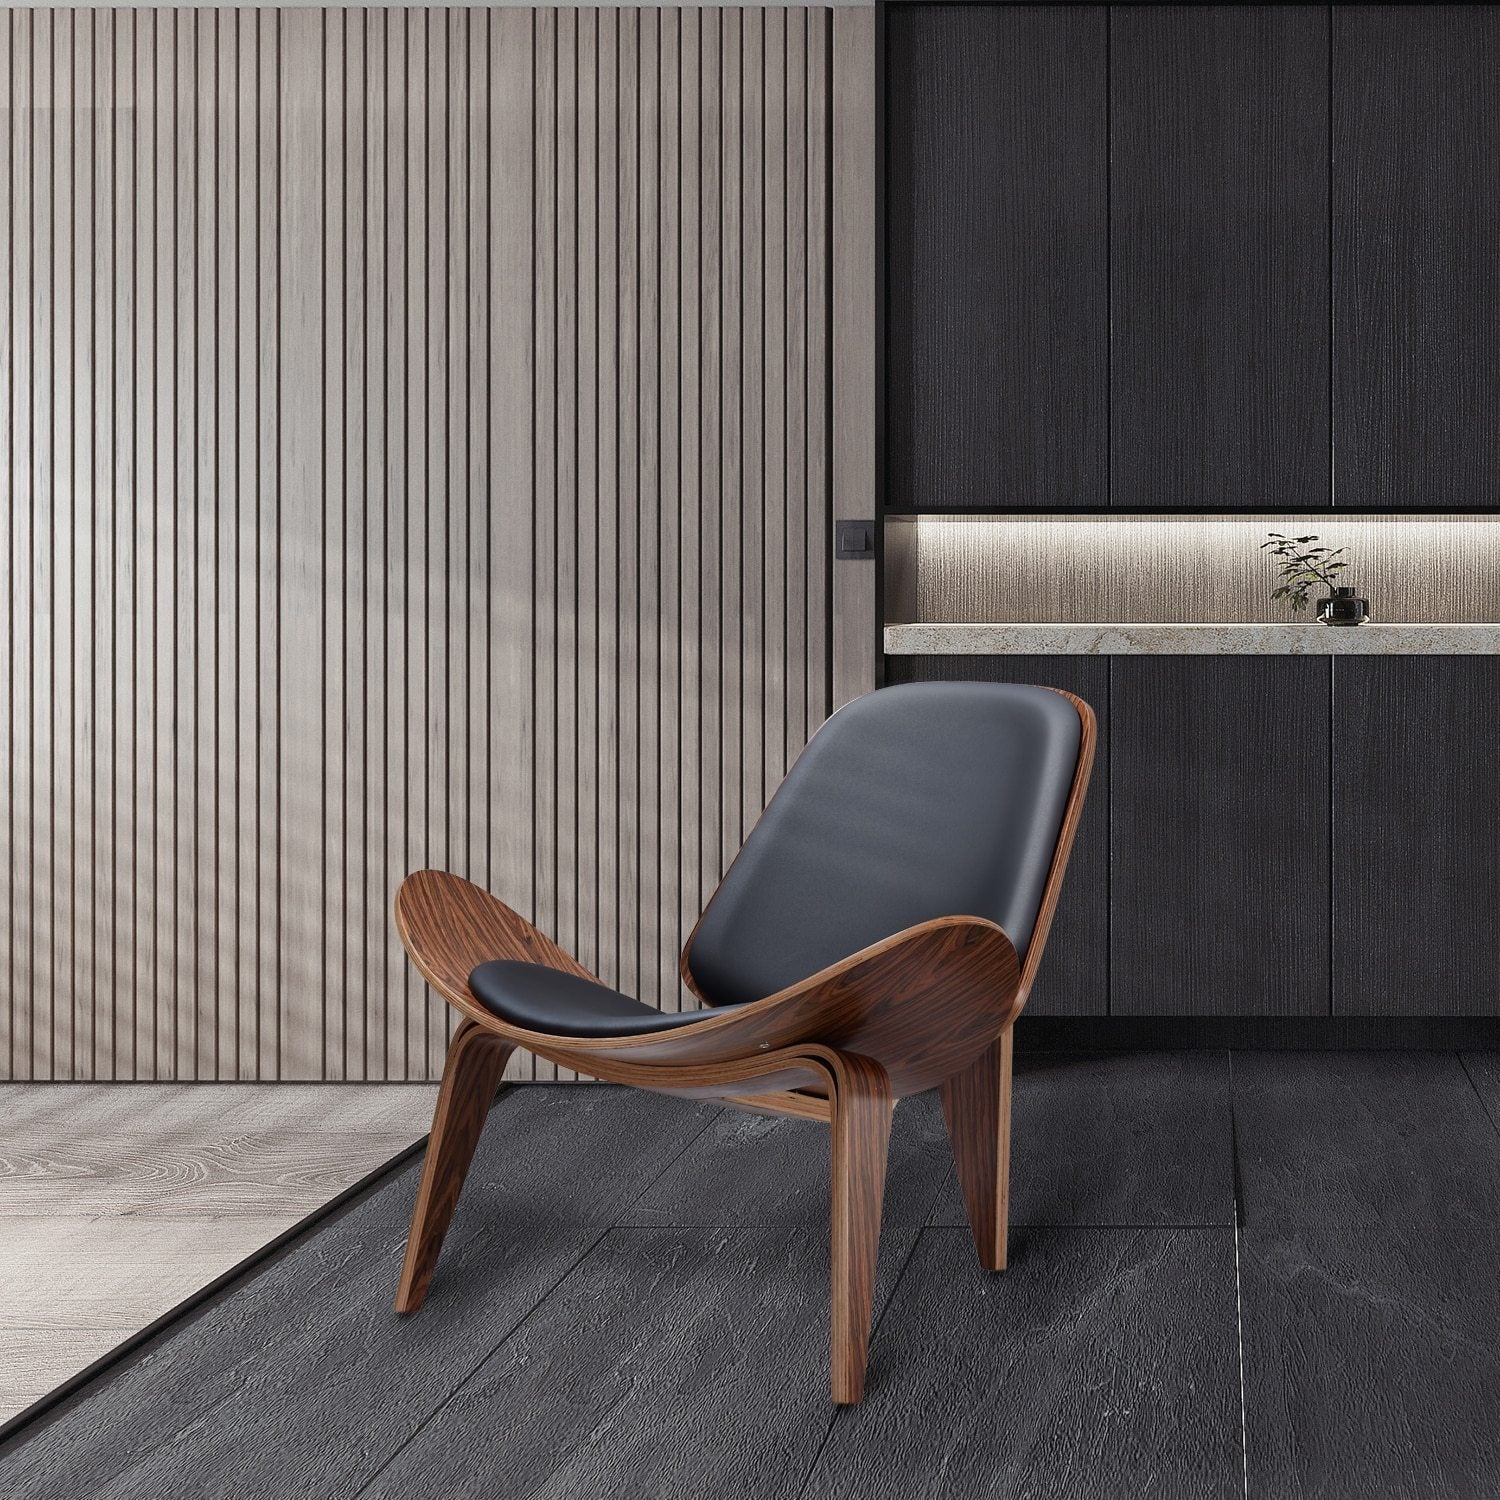 Luxury Vegan Leather Lounge Chair: Modern & Elegant Design for Homes